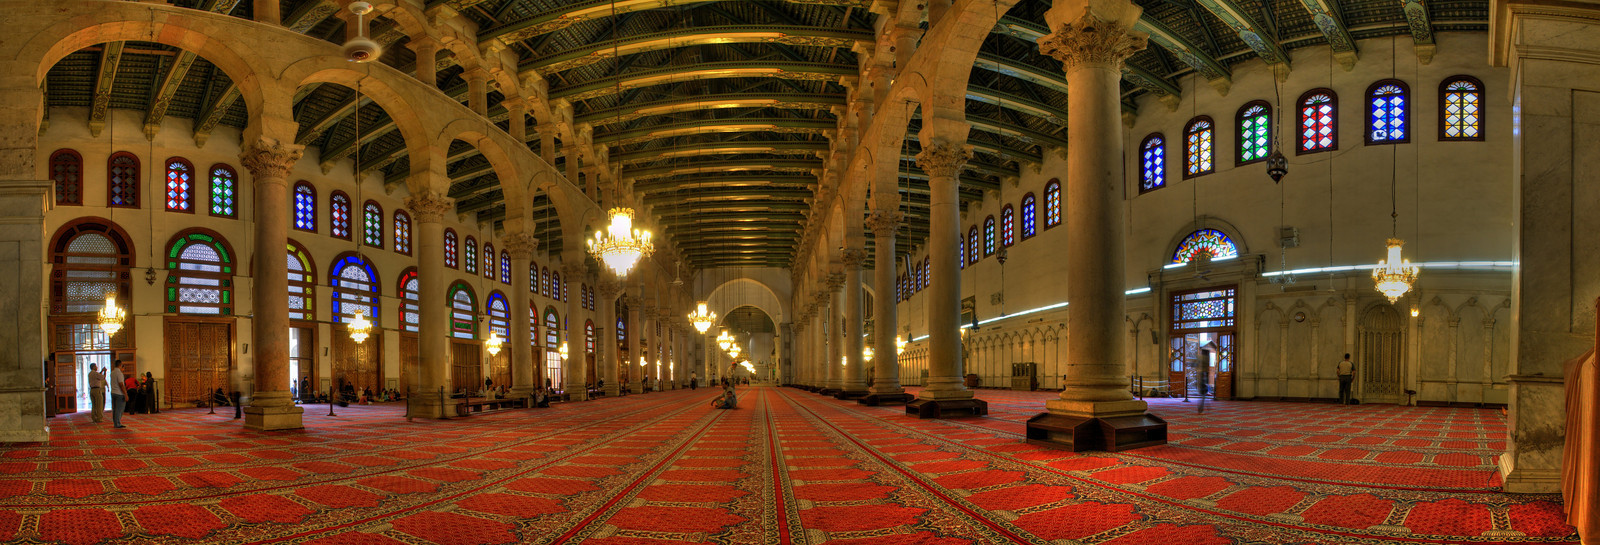 gran_mezquita_damasco.jpg